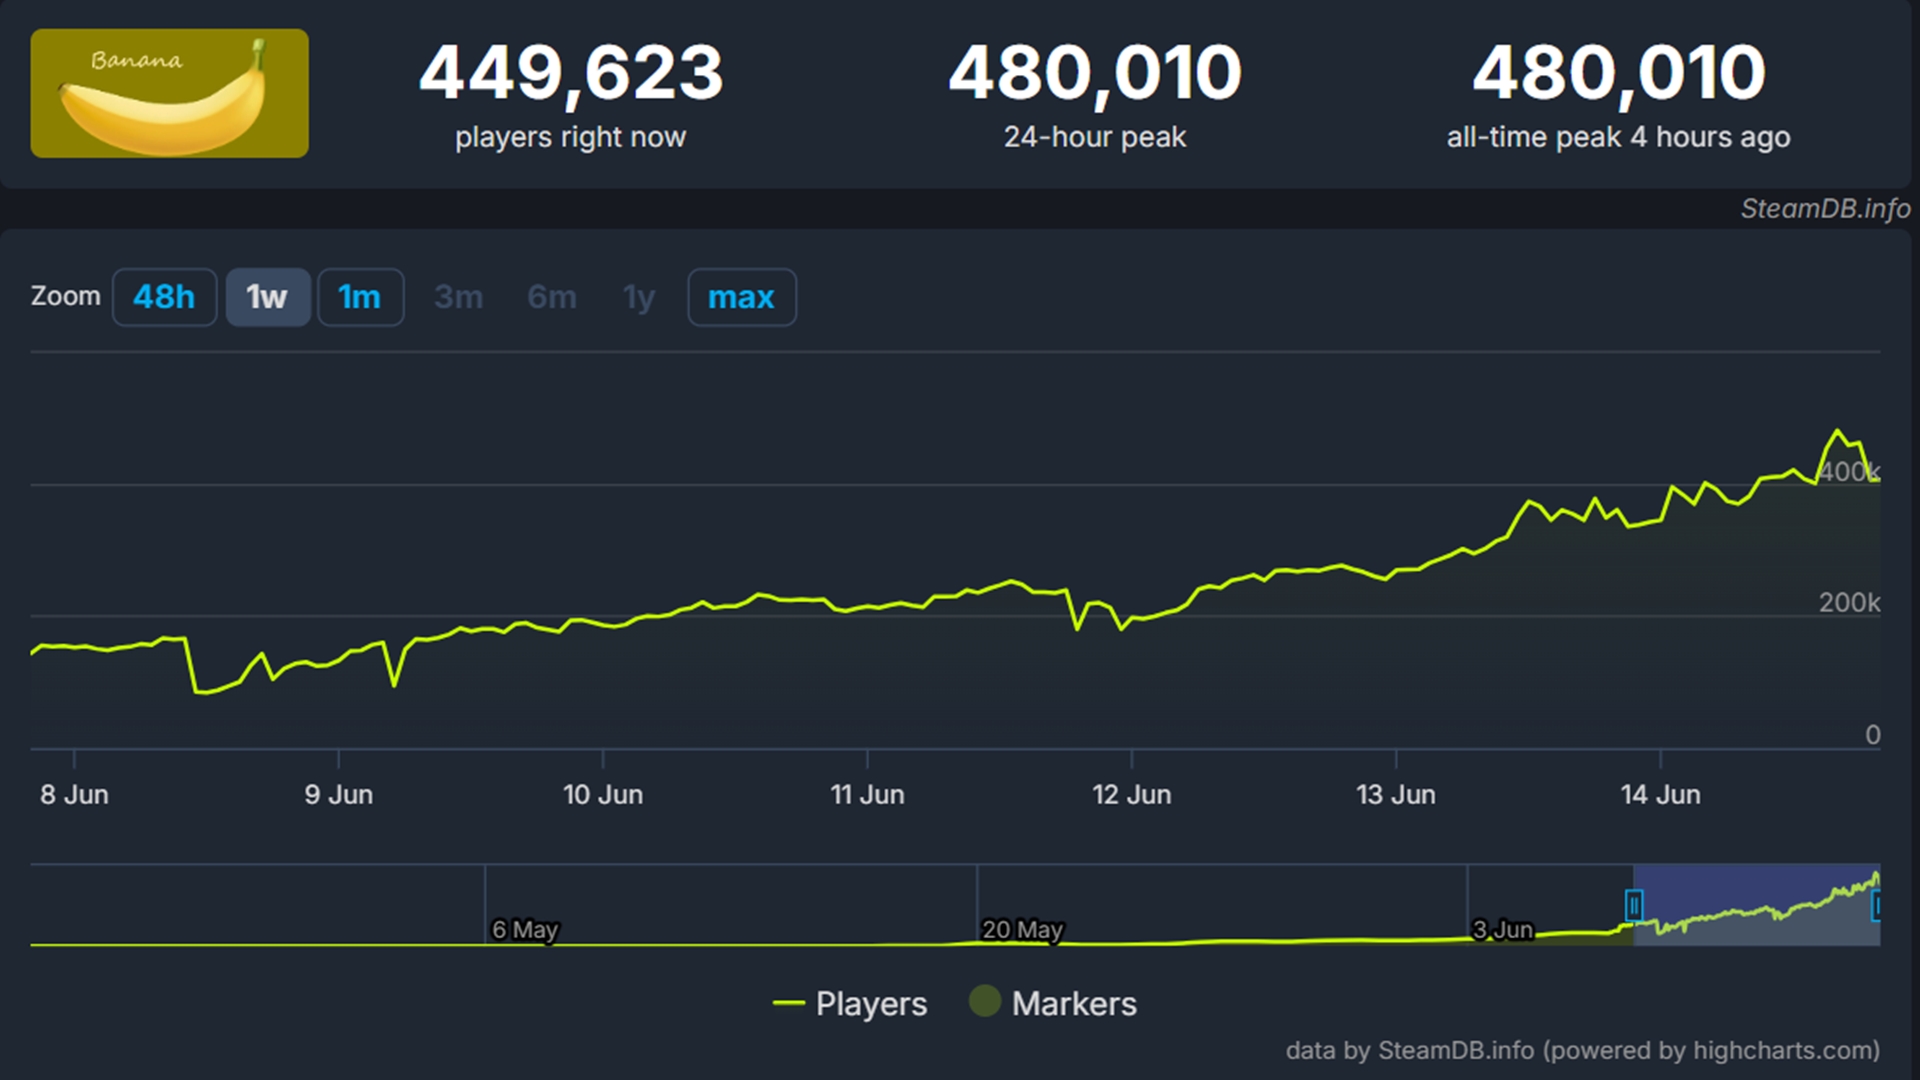 Banana ja ultrapassou a marca de 480 mil jogadores simultâneos na Steam.